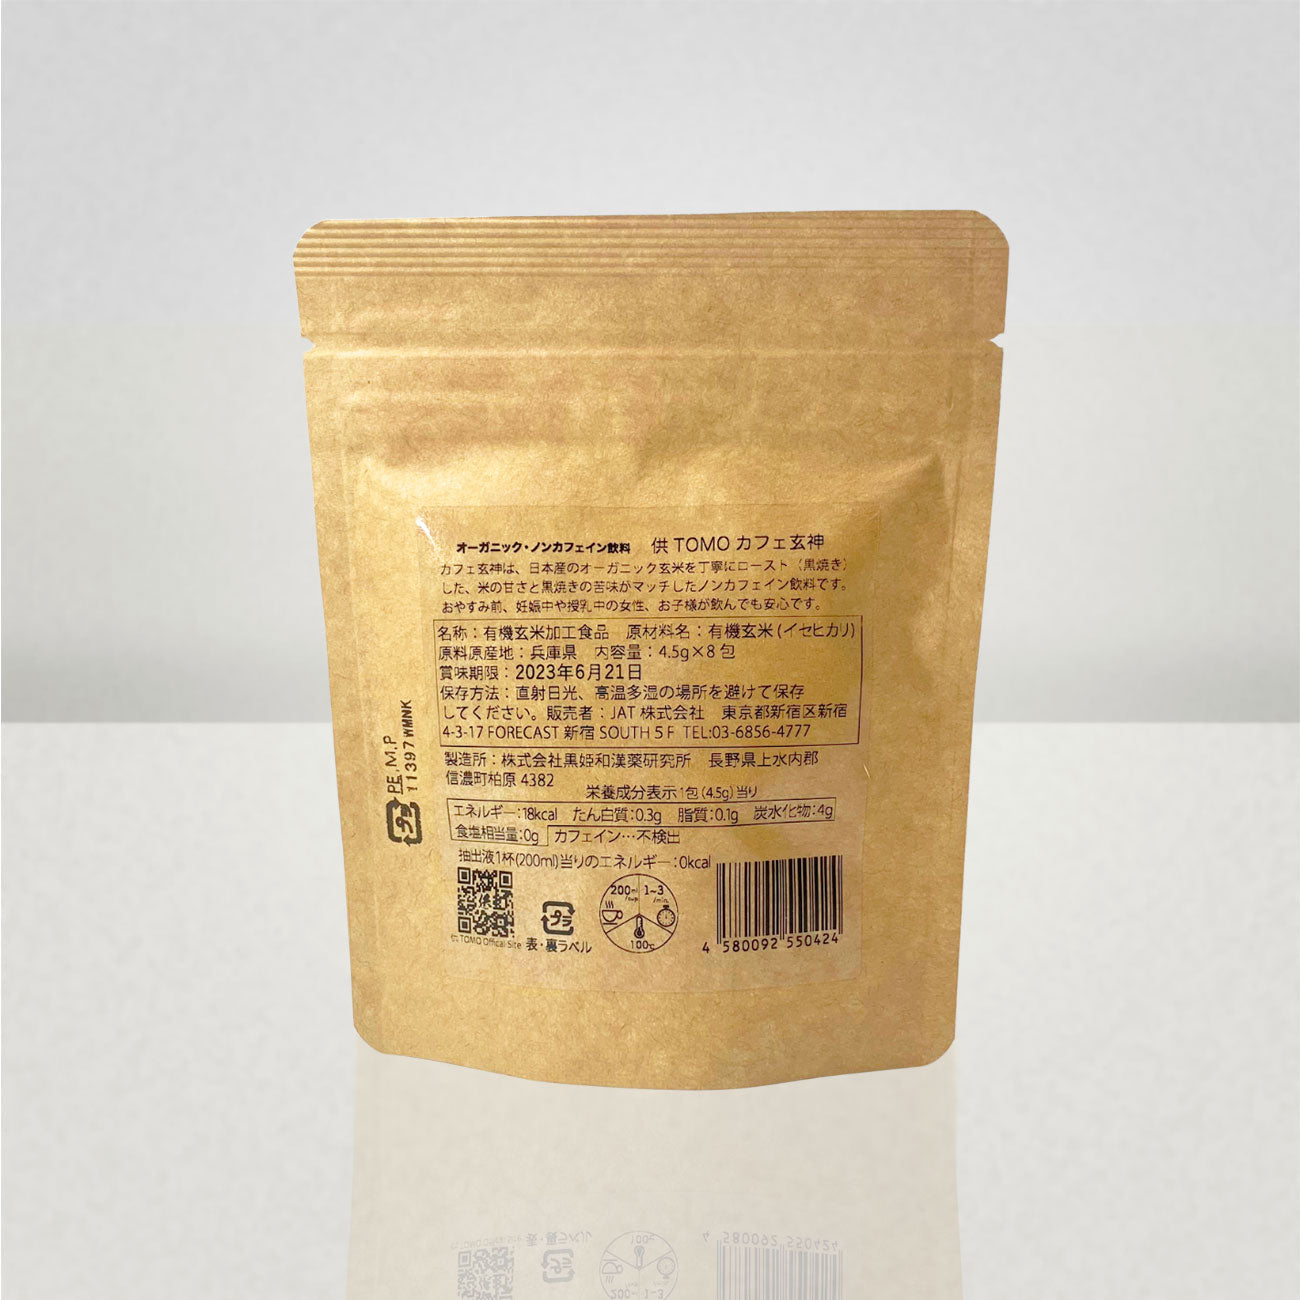 TOMO Café Genshin Organic Premium Brown Rice Coffee (8 tetra bags x5)